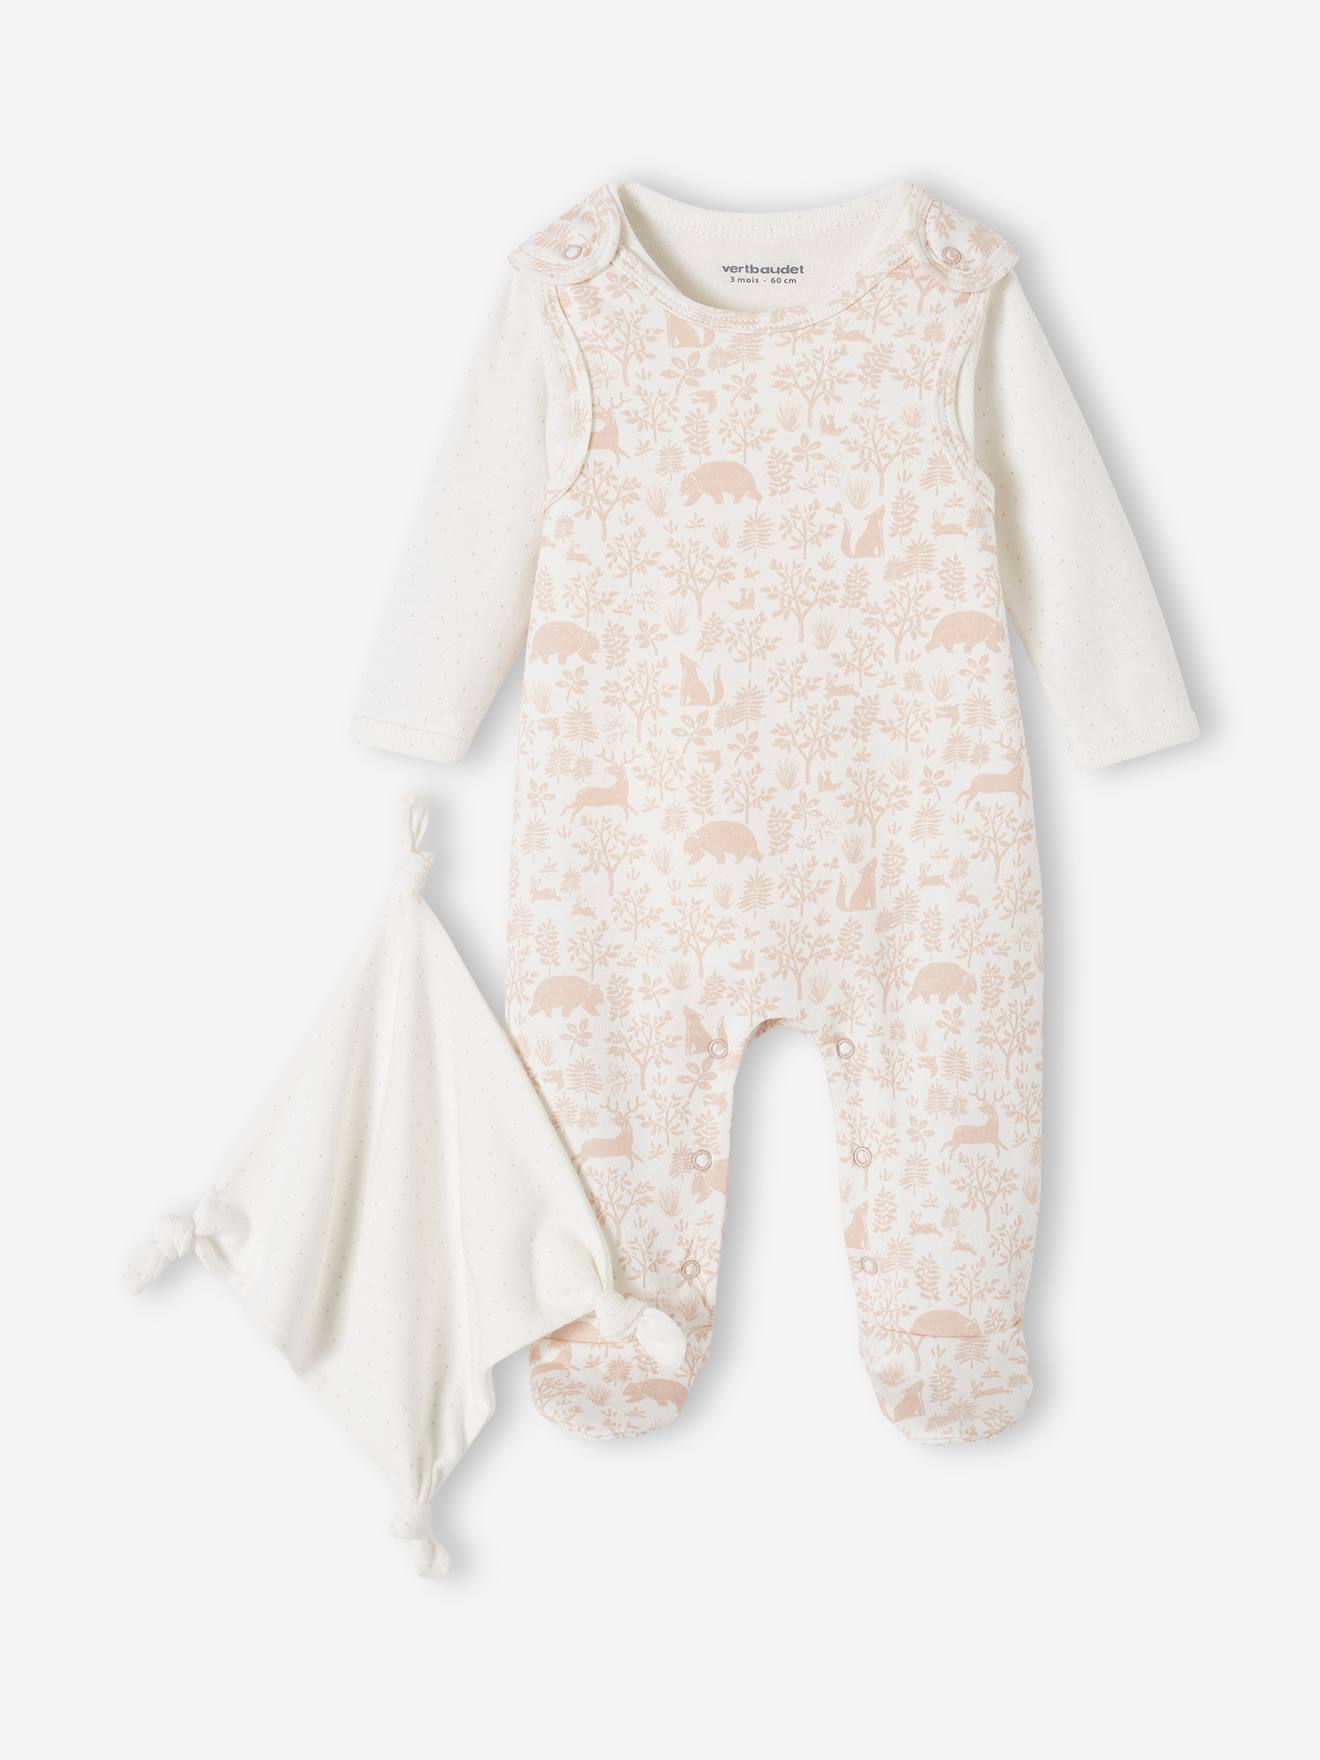 VERTBAUDET Conjunto de 3 prendas para recién nacido: pelele + body + doudou de algodón orgánico rosa maquillaje